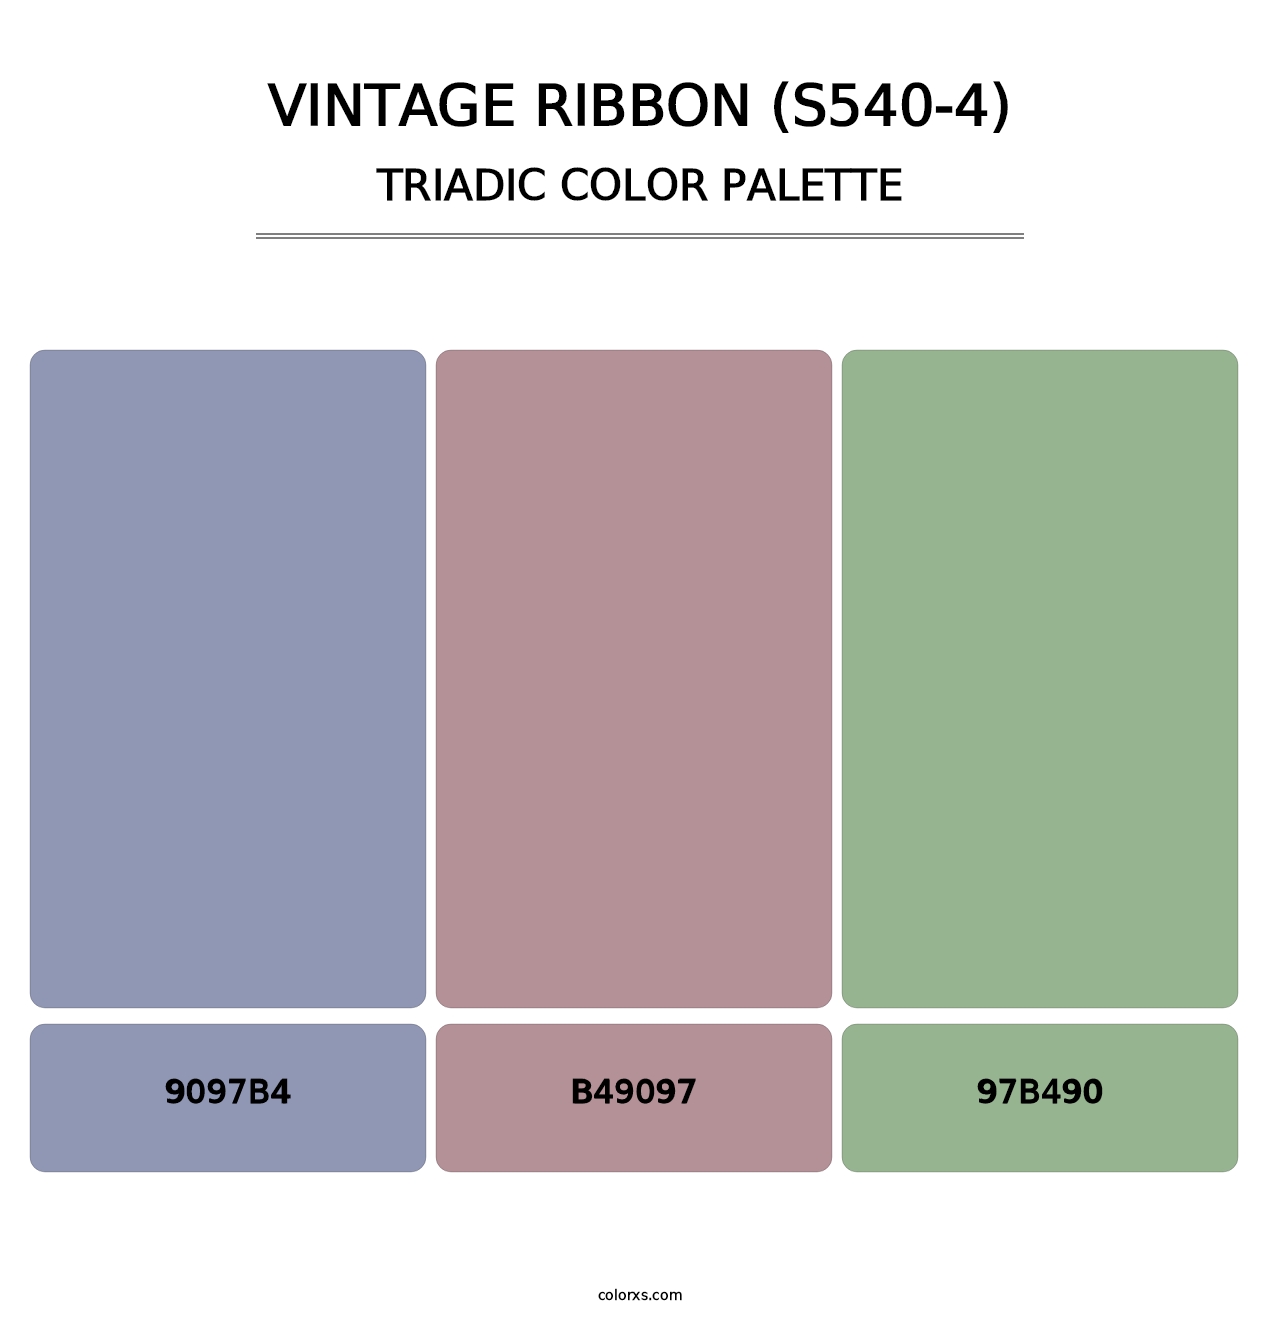 Vintage Ribbon (S540-4) - Triadic Color Palette